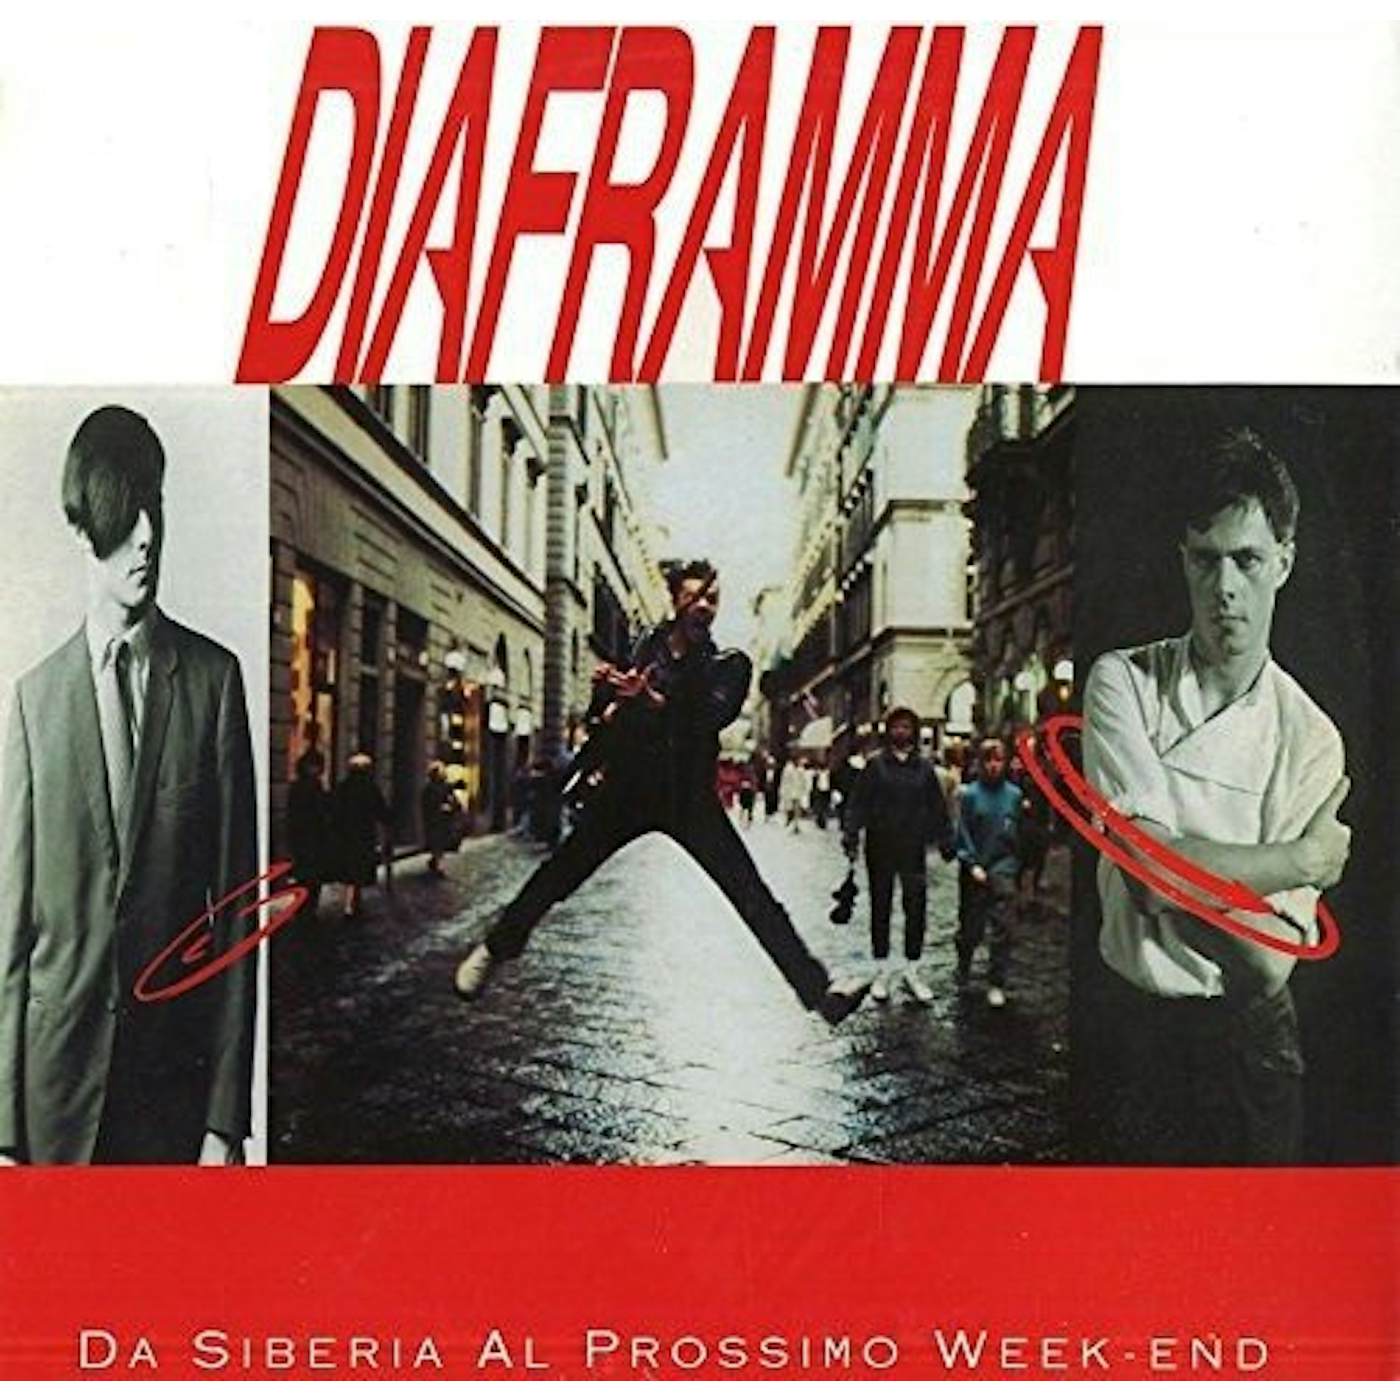 Diaframma DA SIBERIA AL PROSSIMO WEEK END Vinyl Record